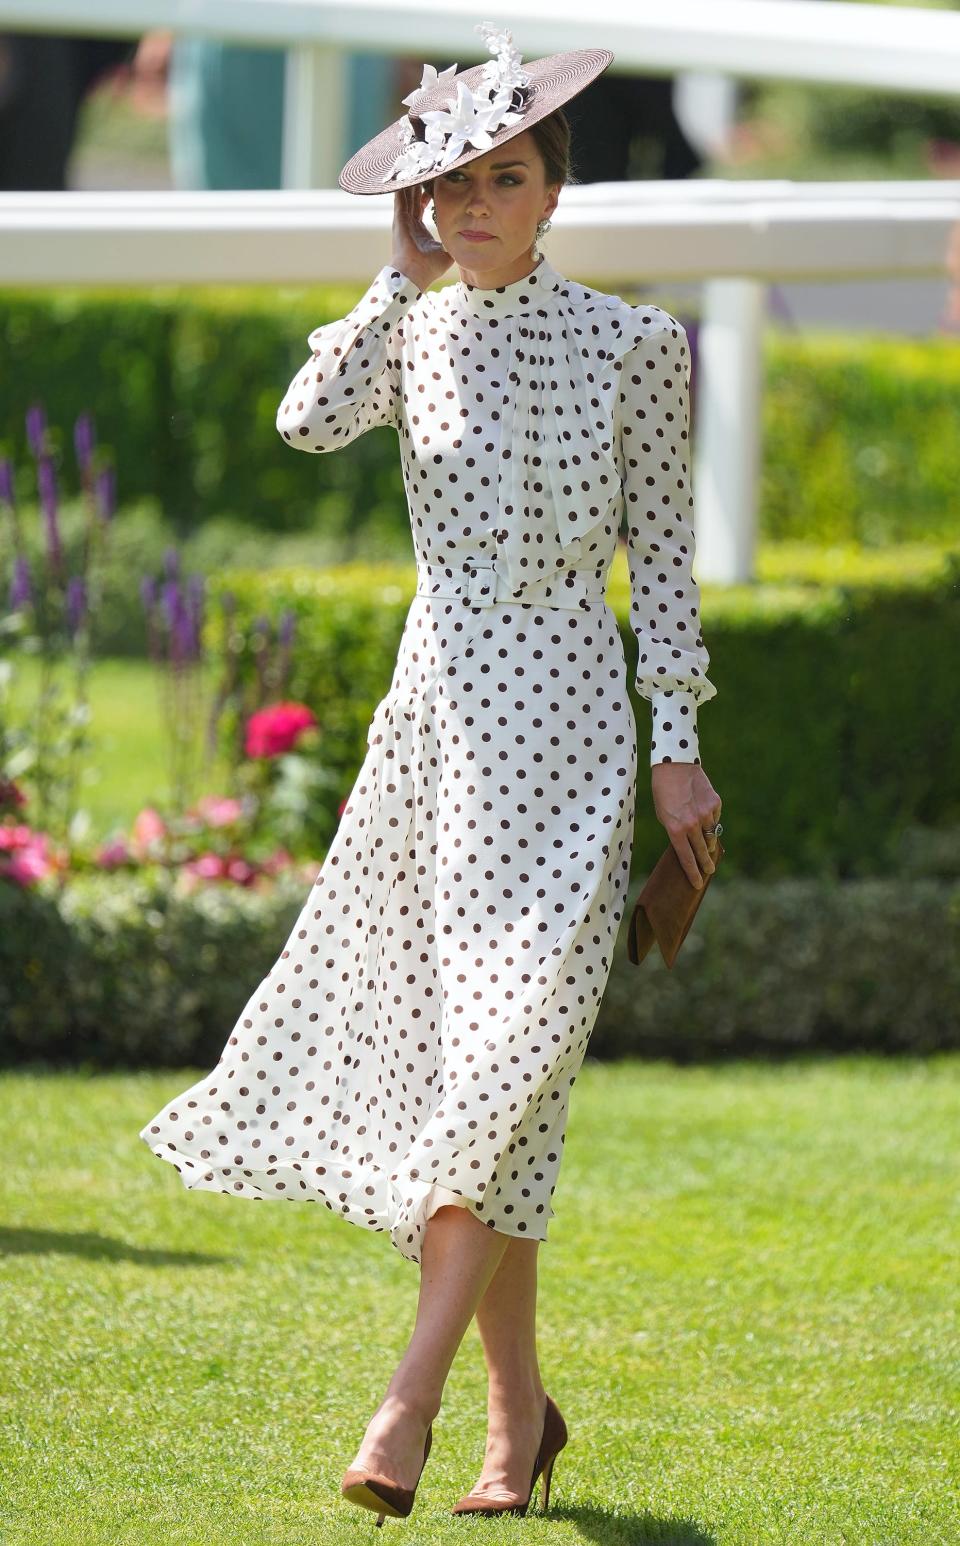 Kate Middleton attends Day 4 of Royal Ascot on June 17. - Credit: James Whatling / MEGA